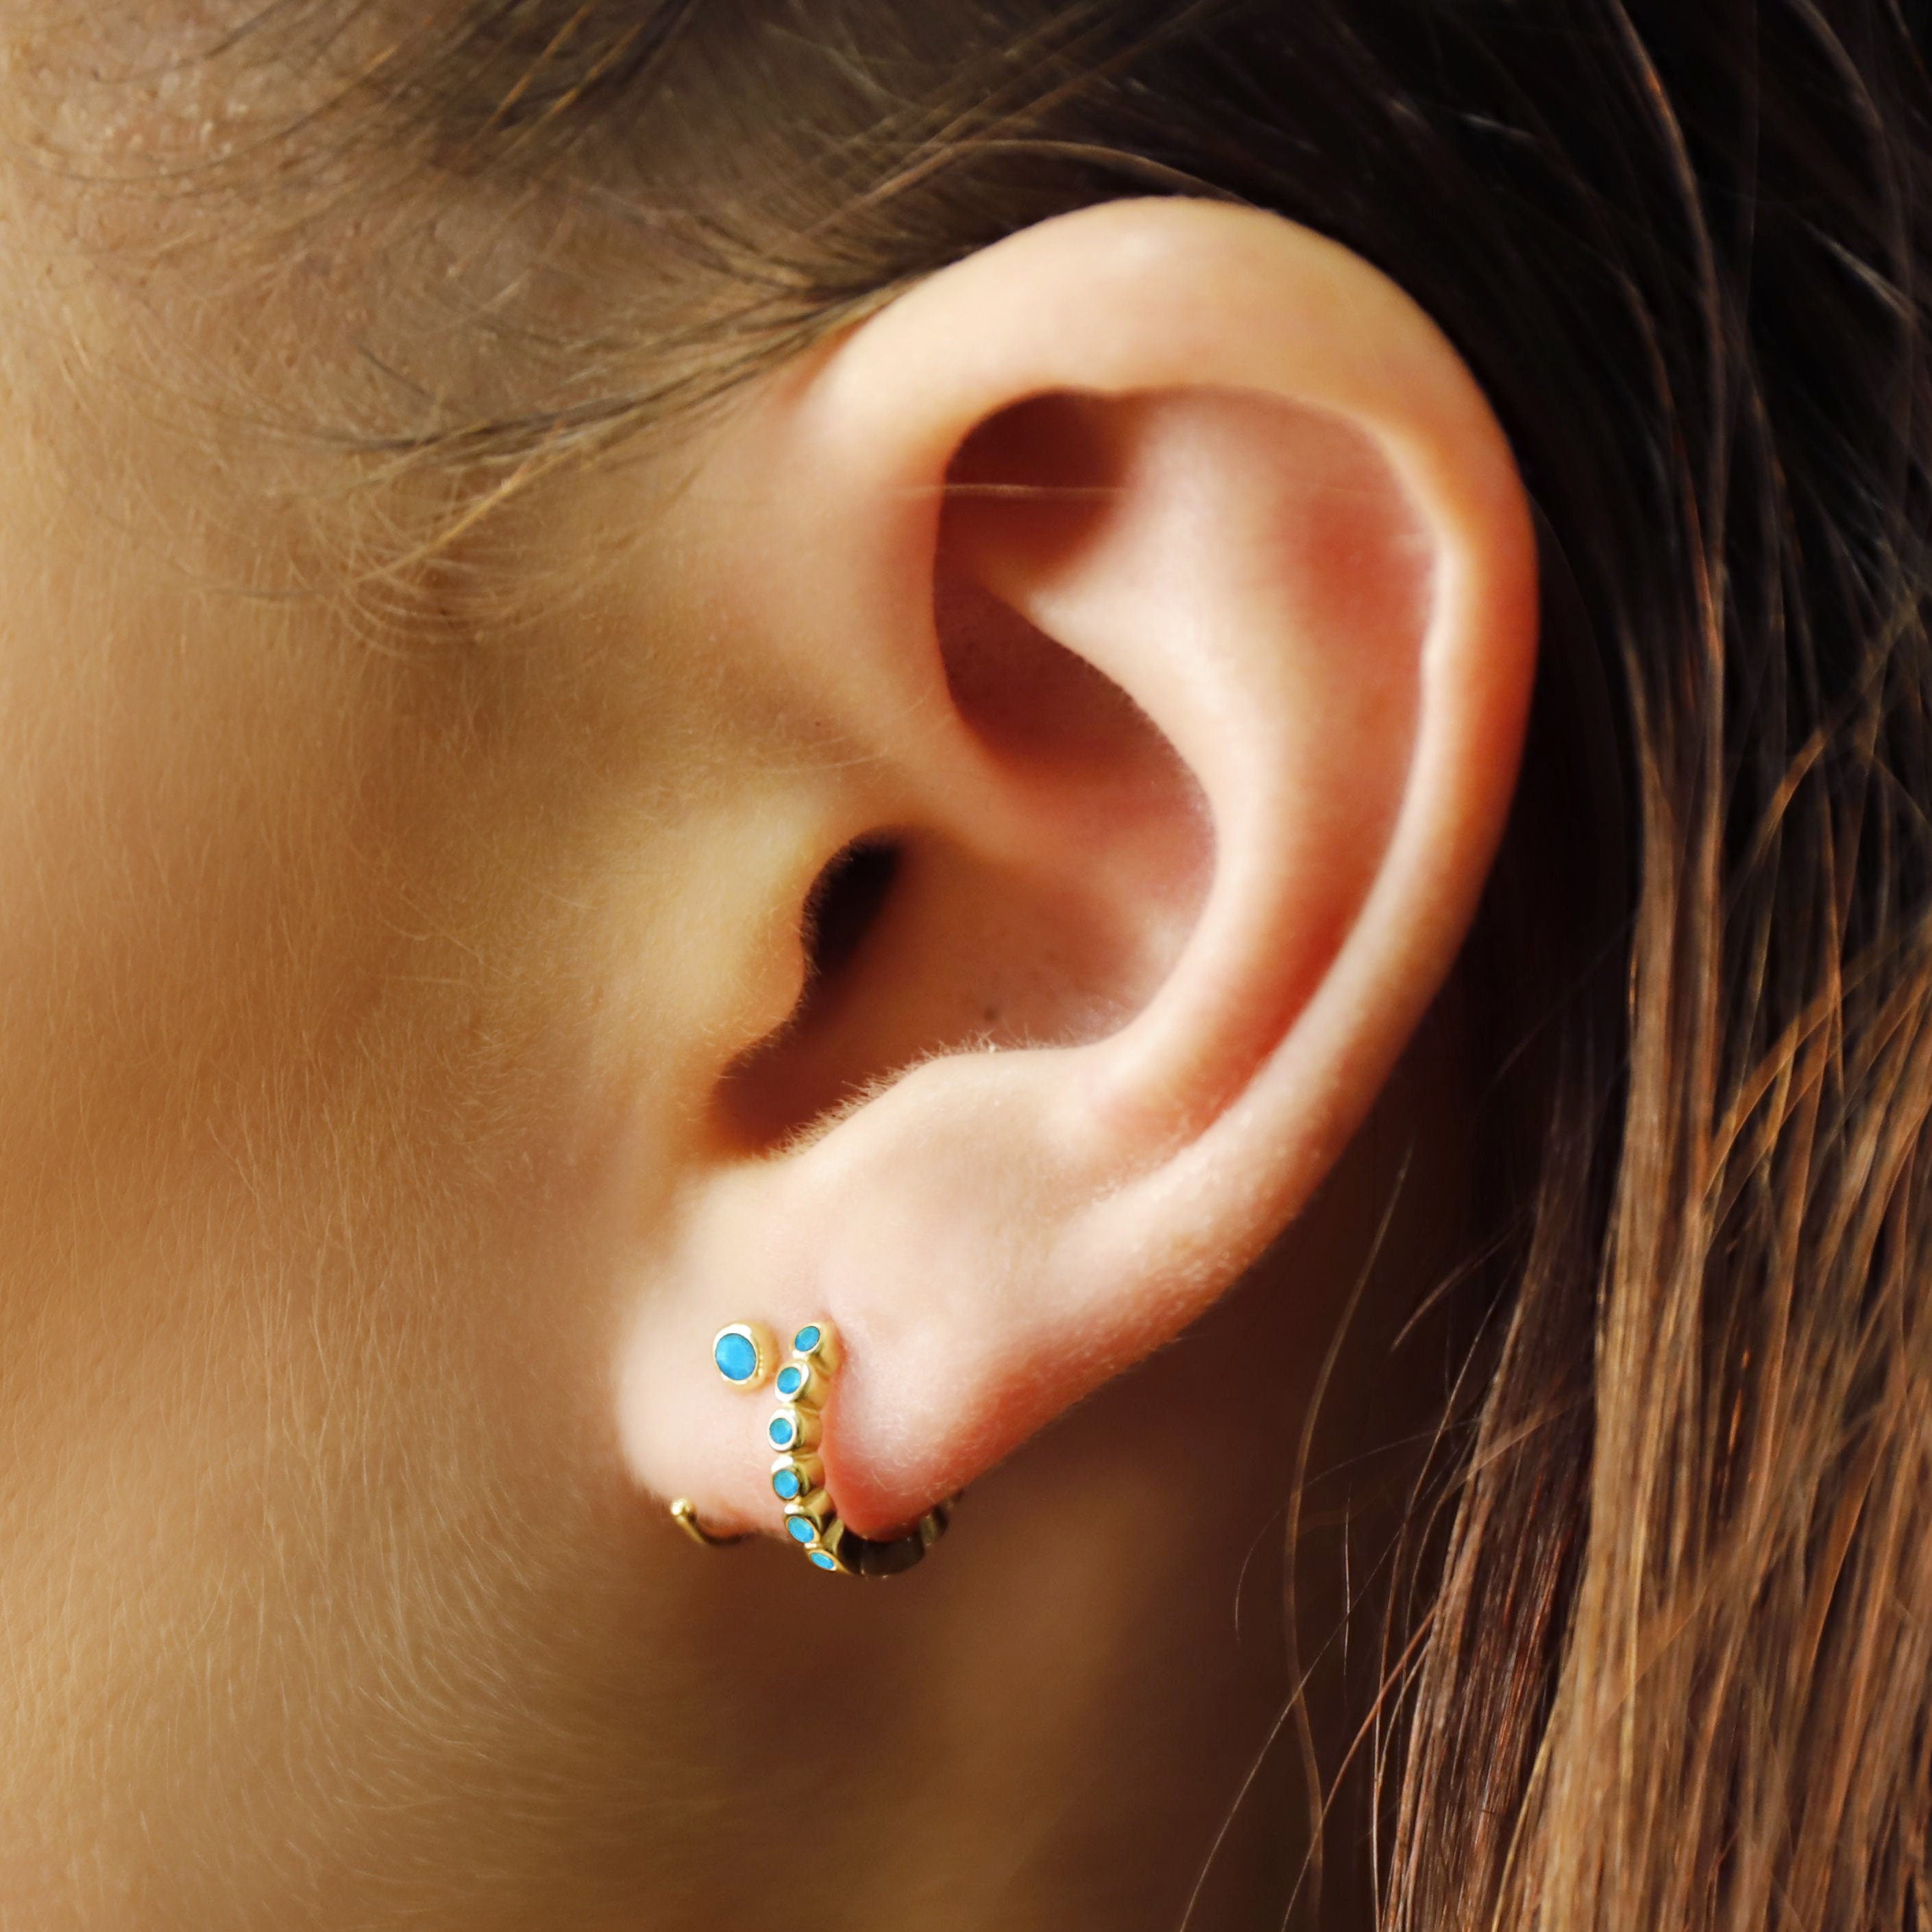 Classic Huggie hoops • 3mm turquoise earrings • Huggie Hoops • Huggie Earrings • Cartilage • Yellow Gold • Sterling Silver 925 • Open Hoops